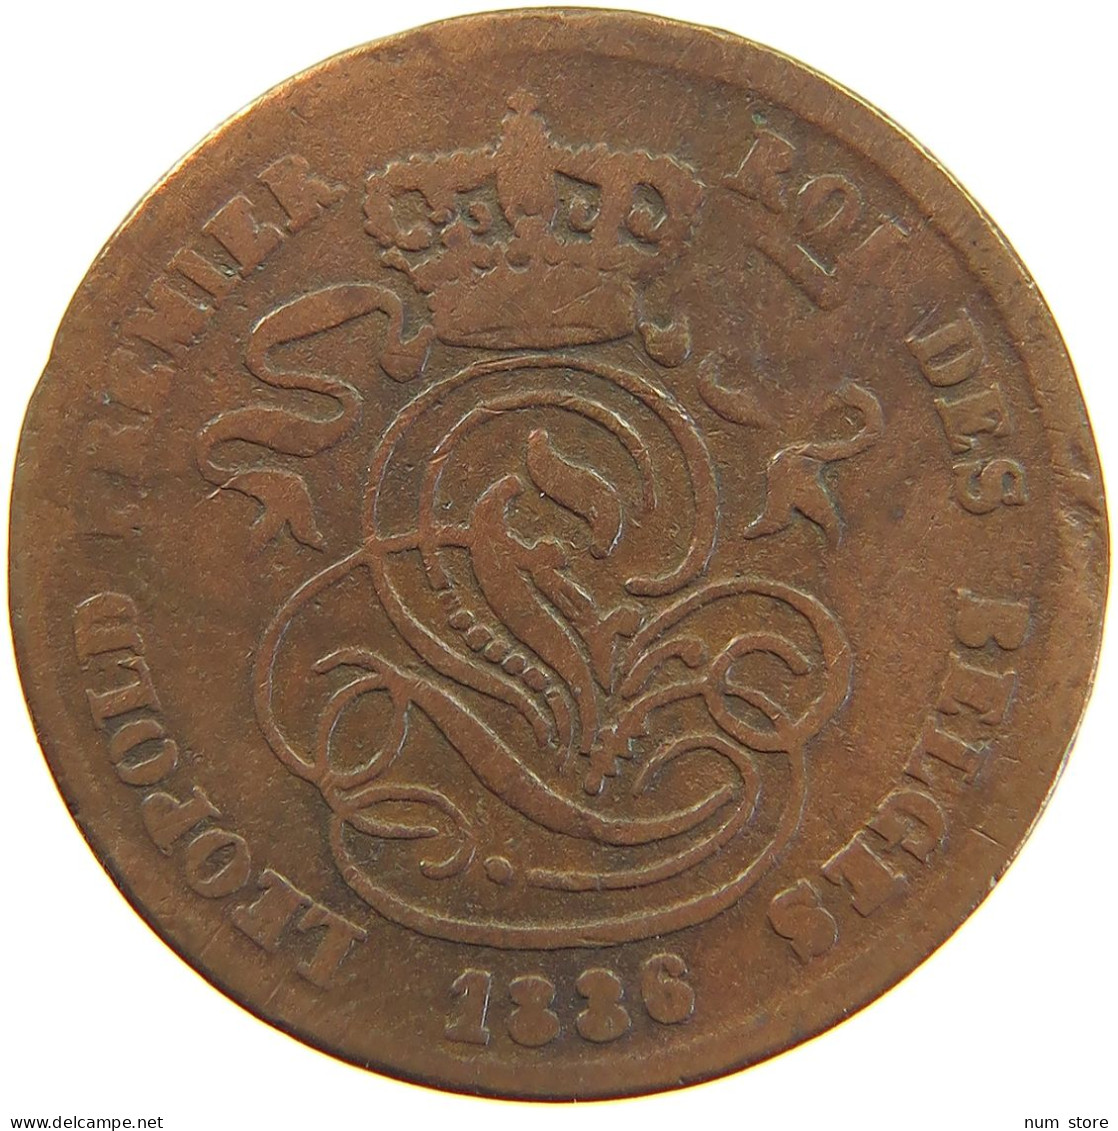 BELGIUM 2 CENTIMES 1836 Leopold I. (1831-1865) 2 CENTIMES 1835 STRUCK OVER NETHERLANDS CENT #c050 0423 - 2 Cents